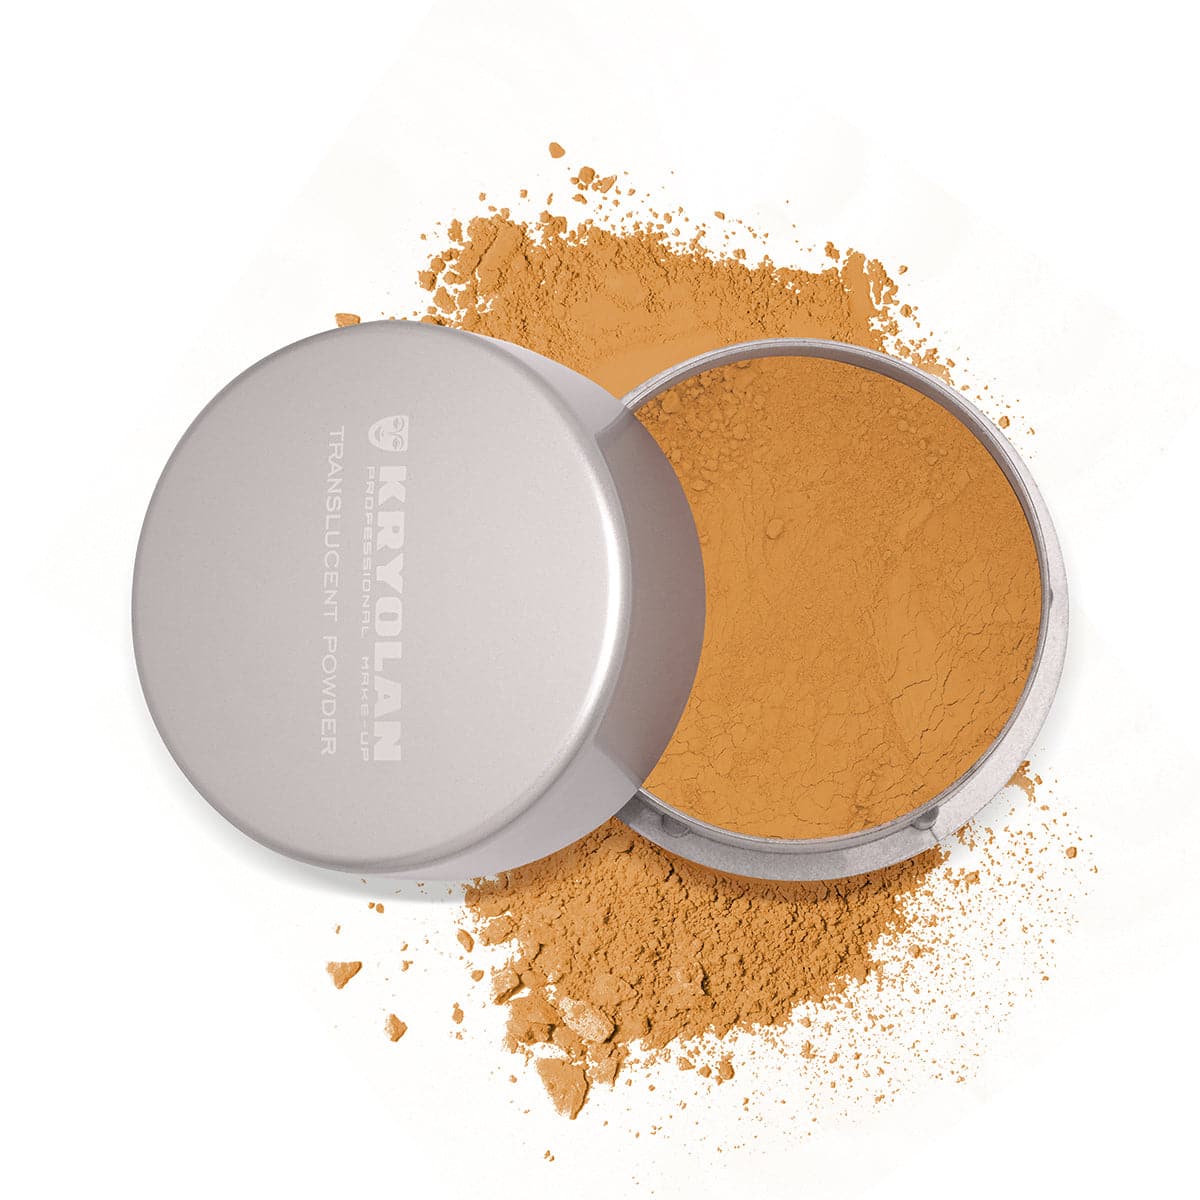 Kryolan Translucent Powder - TL 5 - Premium Health & Beauty from Kryolan - Just Rs 5540.00! Shop now at Cozmetica